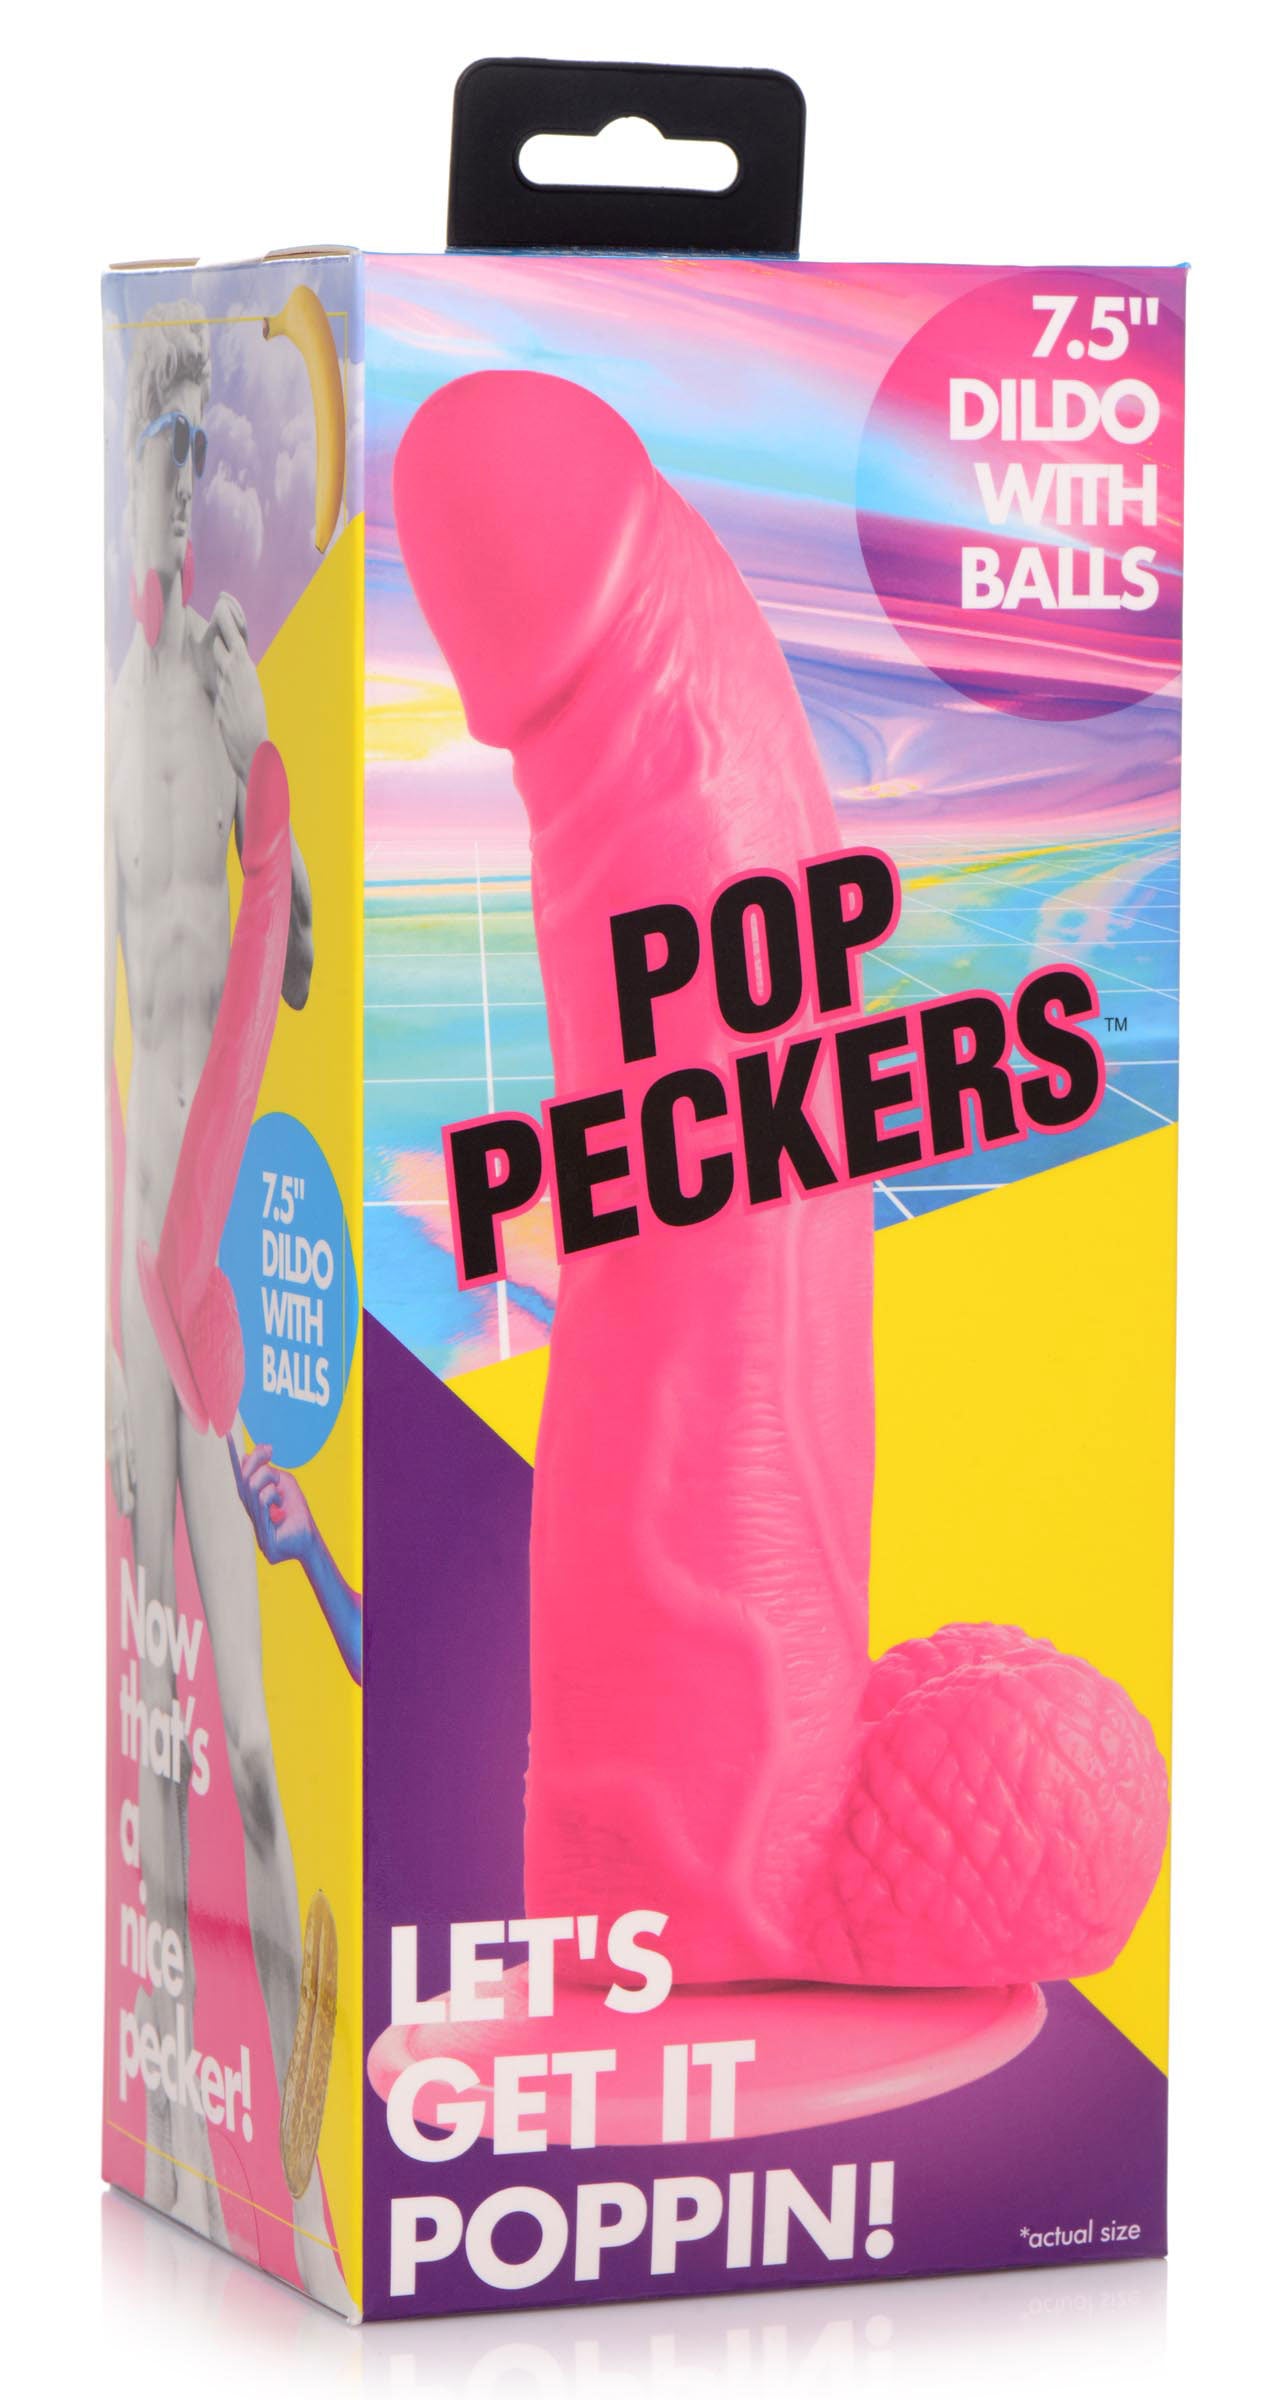 Pop Pecker 7.5 Inch Dildo With Balls - Pink-6